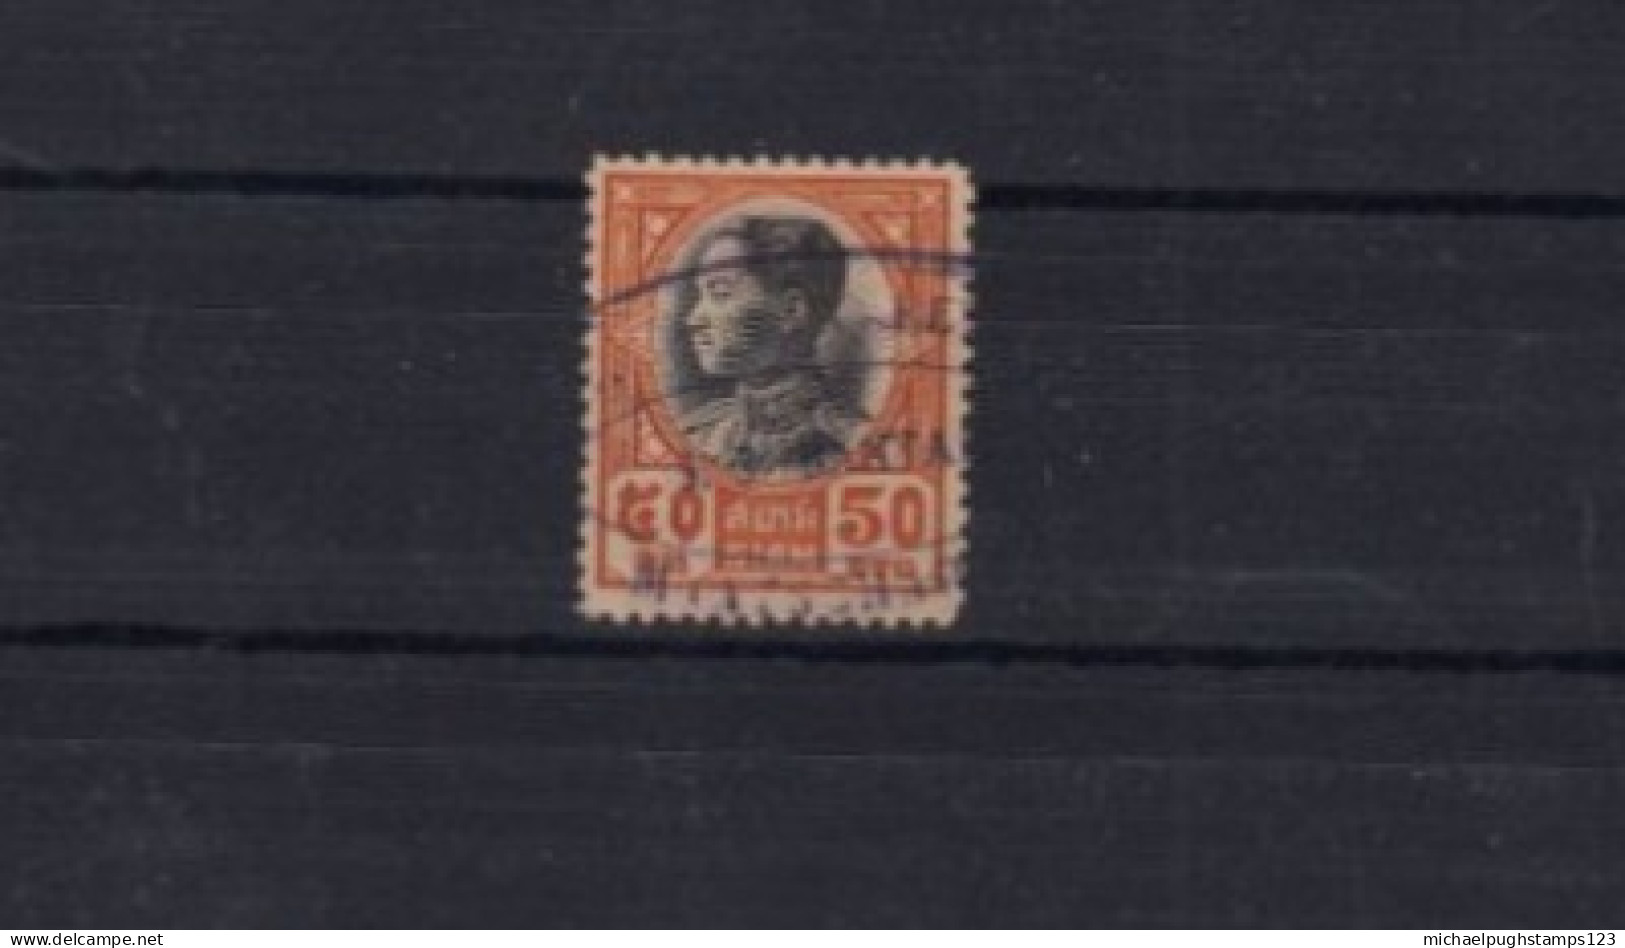 Thailand / Stamps / River Steamer Postmarks - Thailand